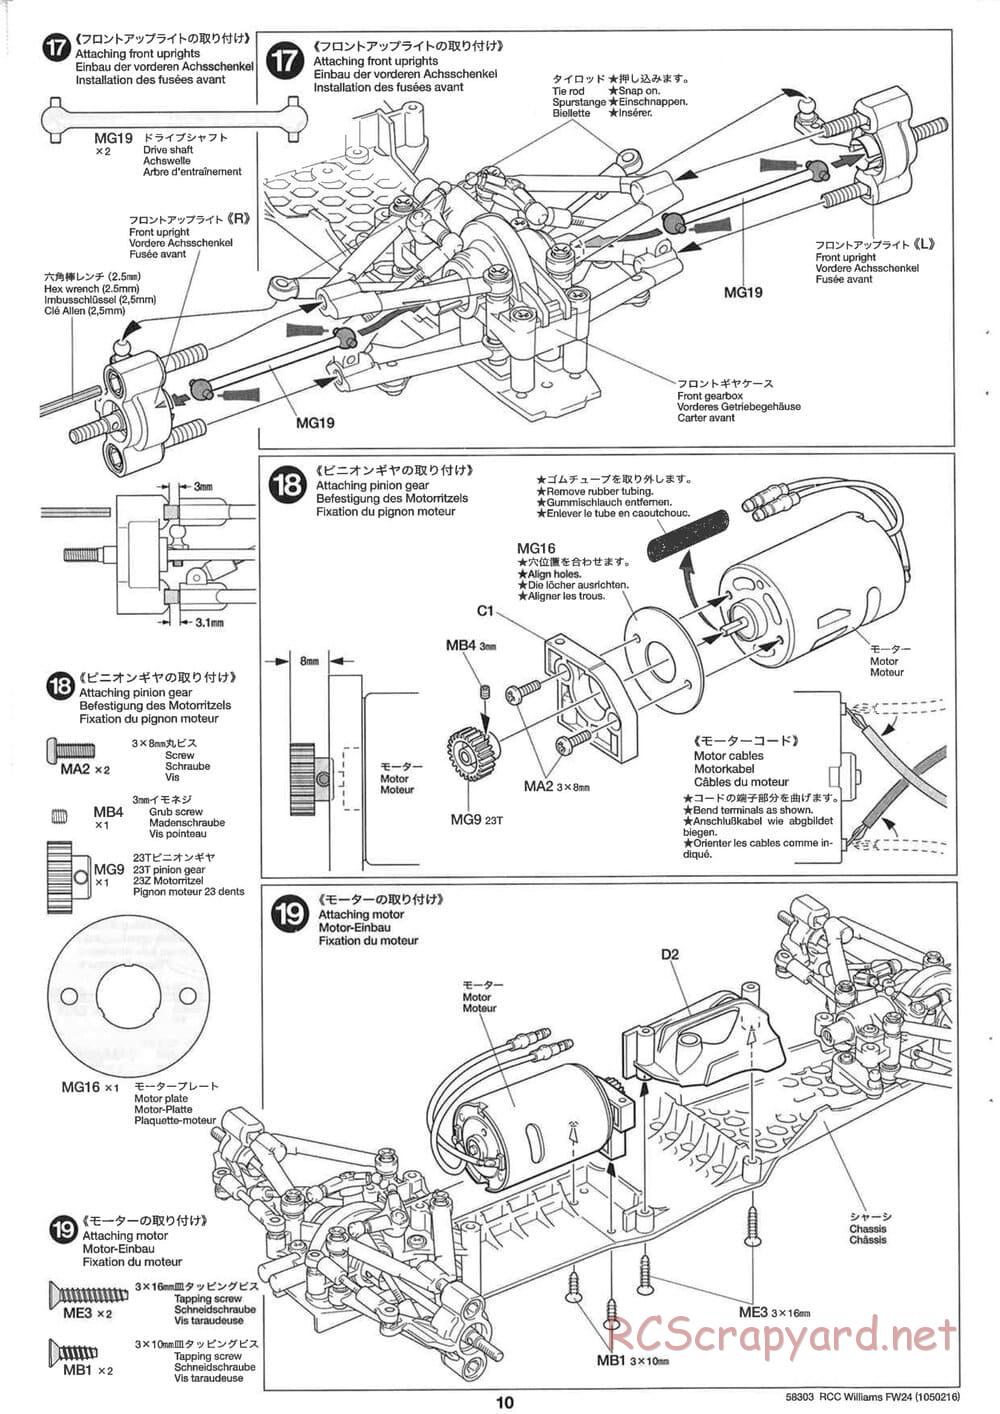 Tamiya - Williams F1 BMW FW24 - F201 Chassis - Manual - Page 10